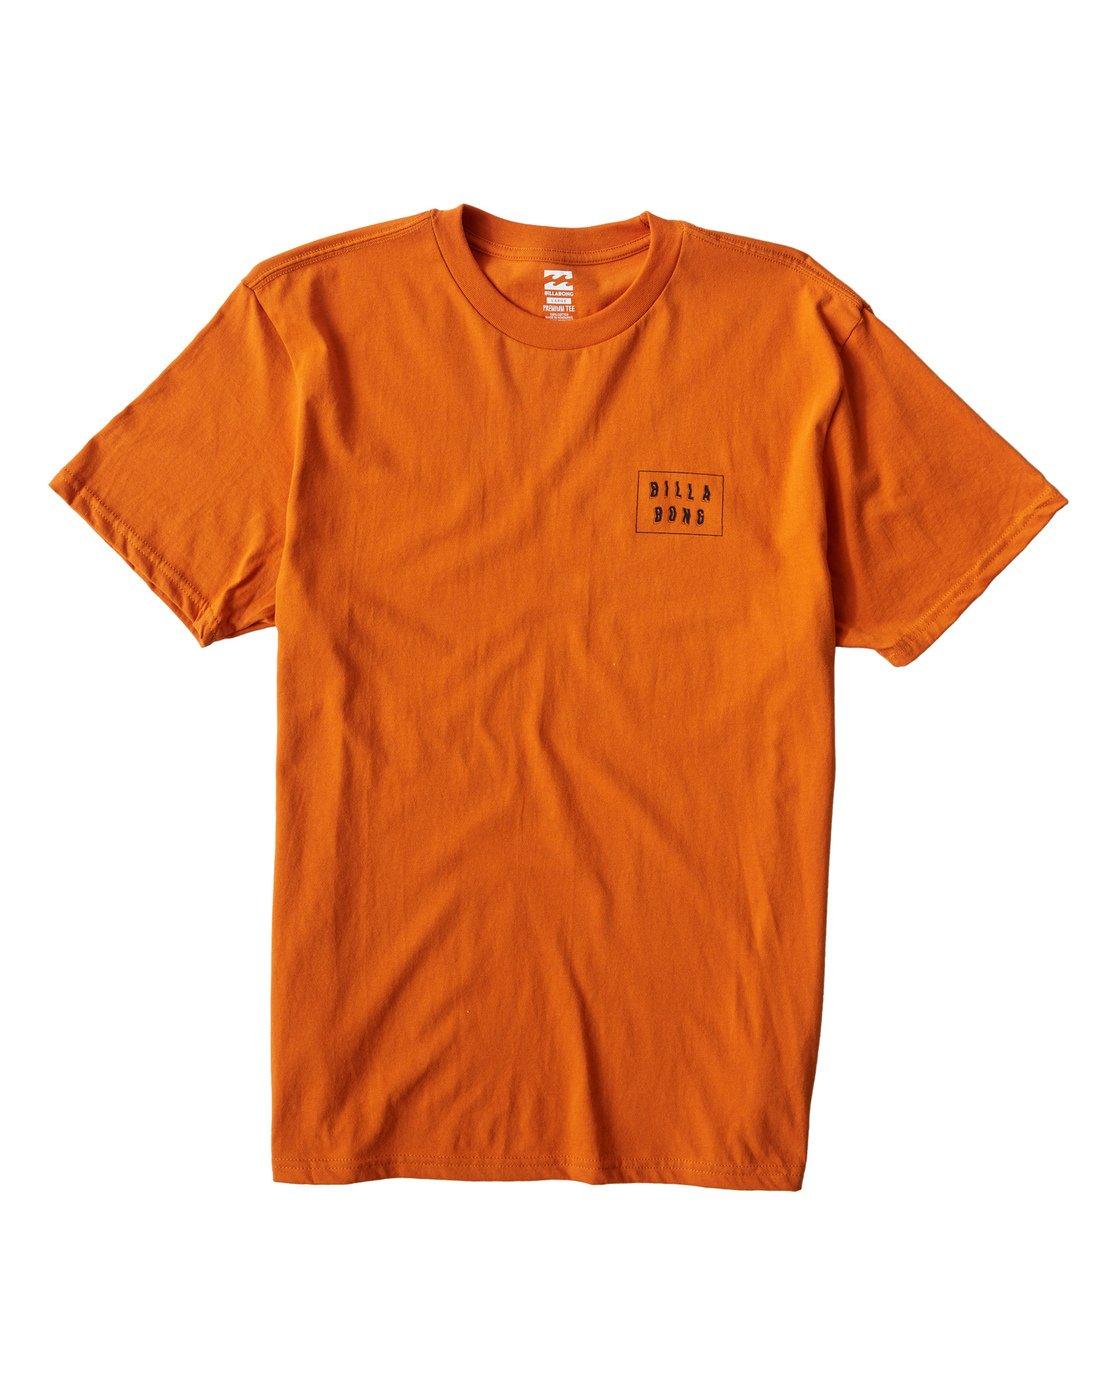 Billabong Cotton Ripple T-shirt in Orange for Men - Lyst